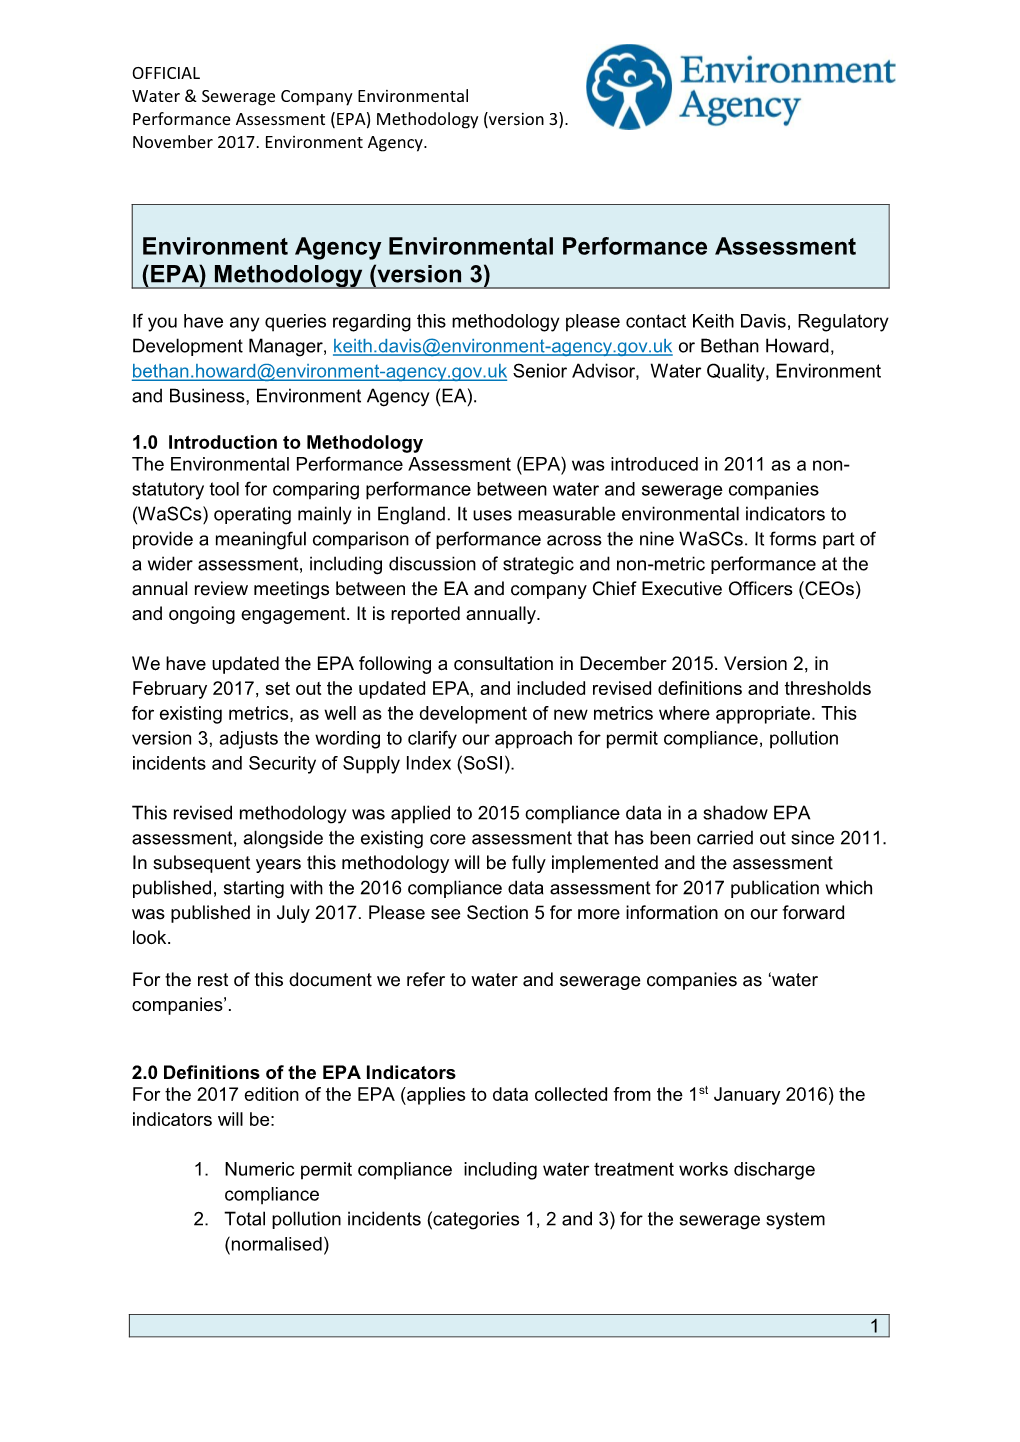 Environment Agency Environmental Performance Assessment (EPA) Methodology (Version 3)